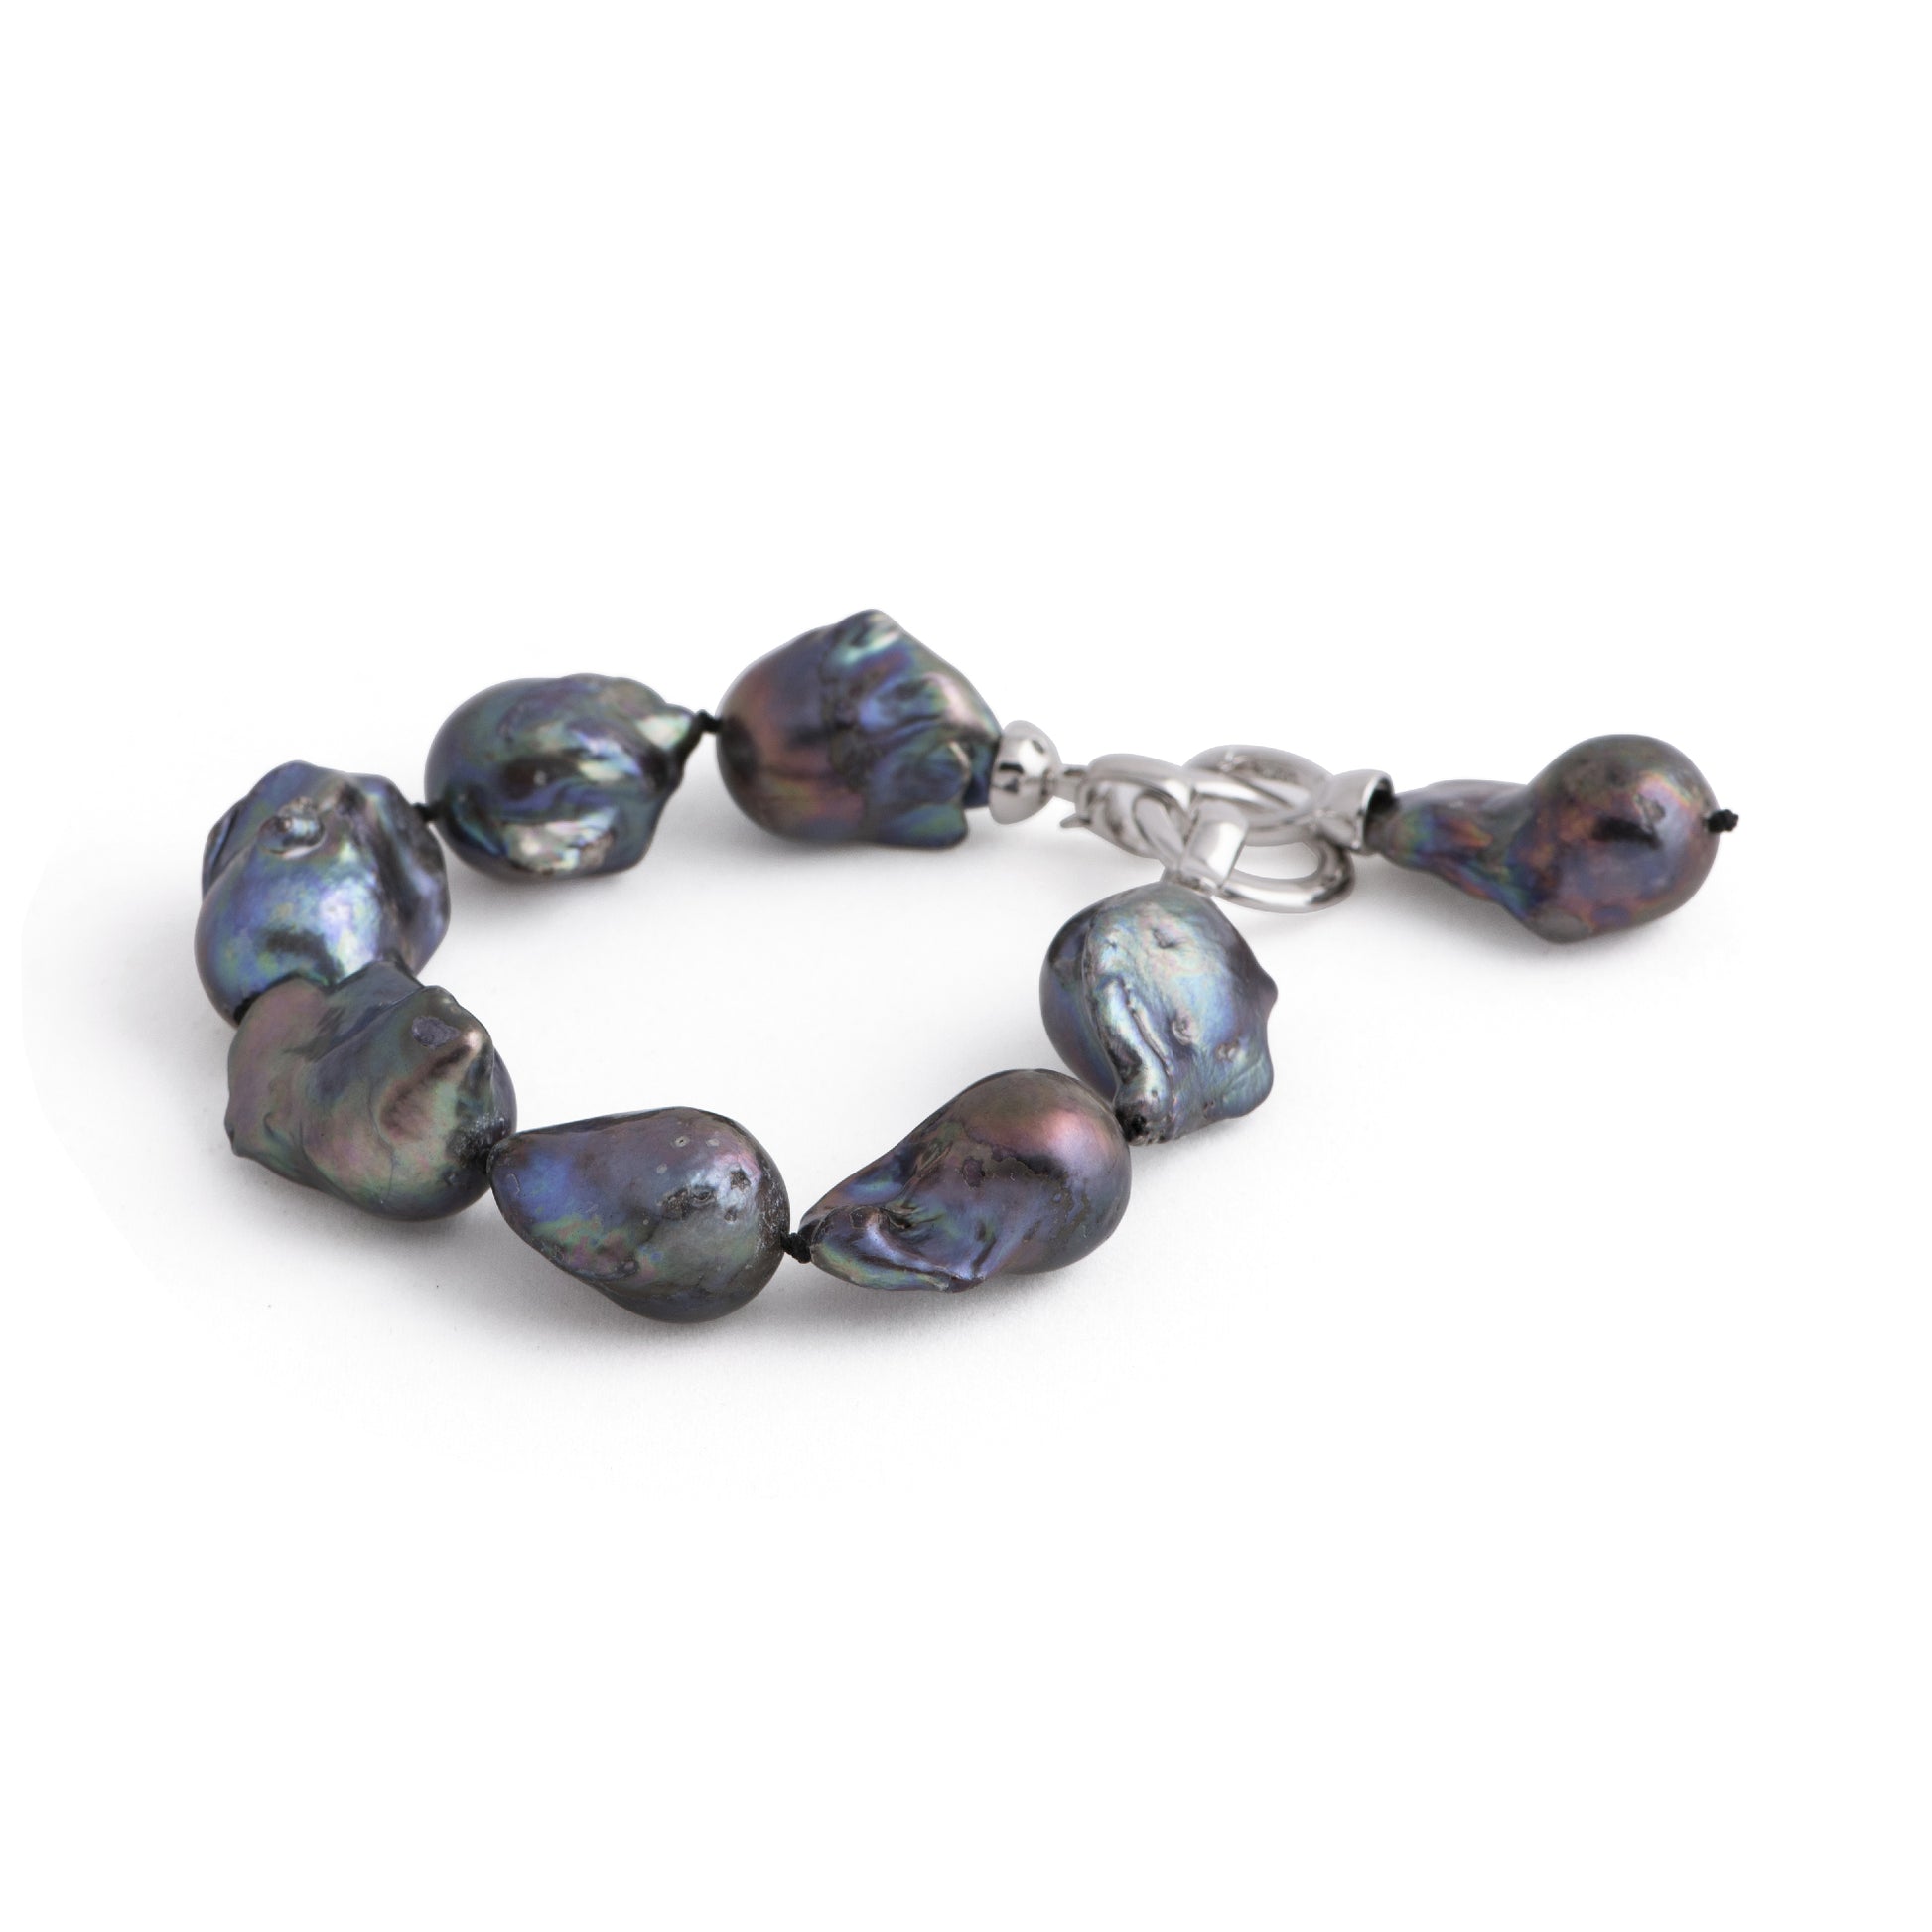 Nile - Baroque pearl charm bracelet (Dark grey pearls)